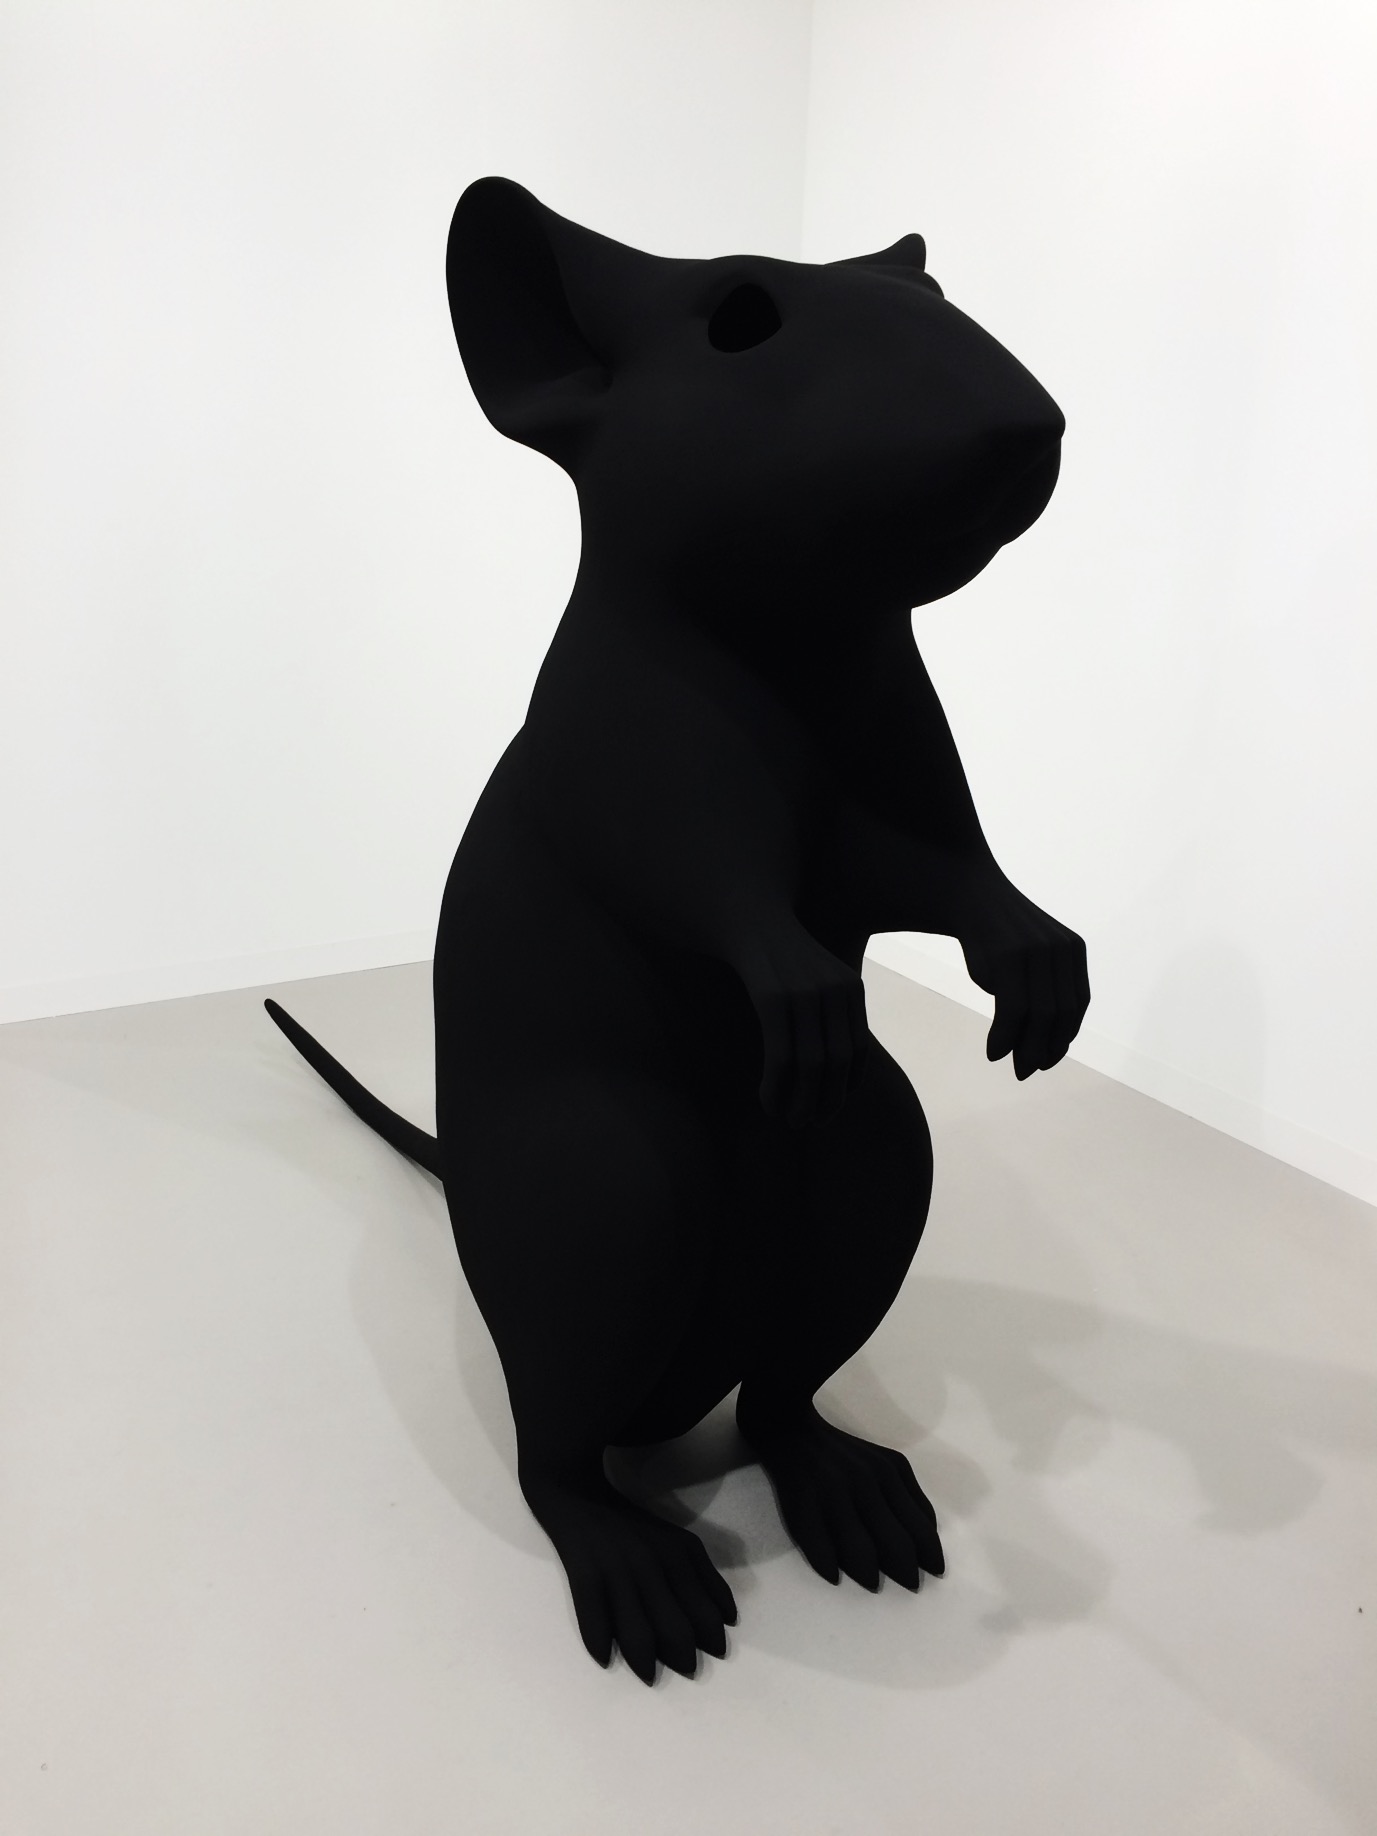 Matthew Marks Gallery Art Basel - Katharina Fritsch, Hohle Maus, 1992/2015